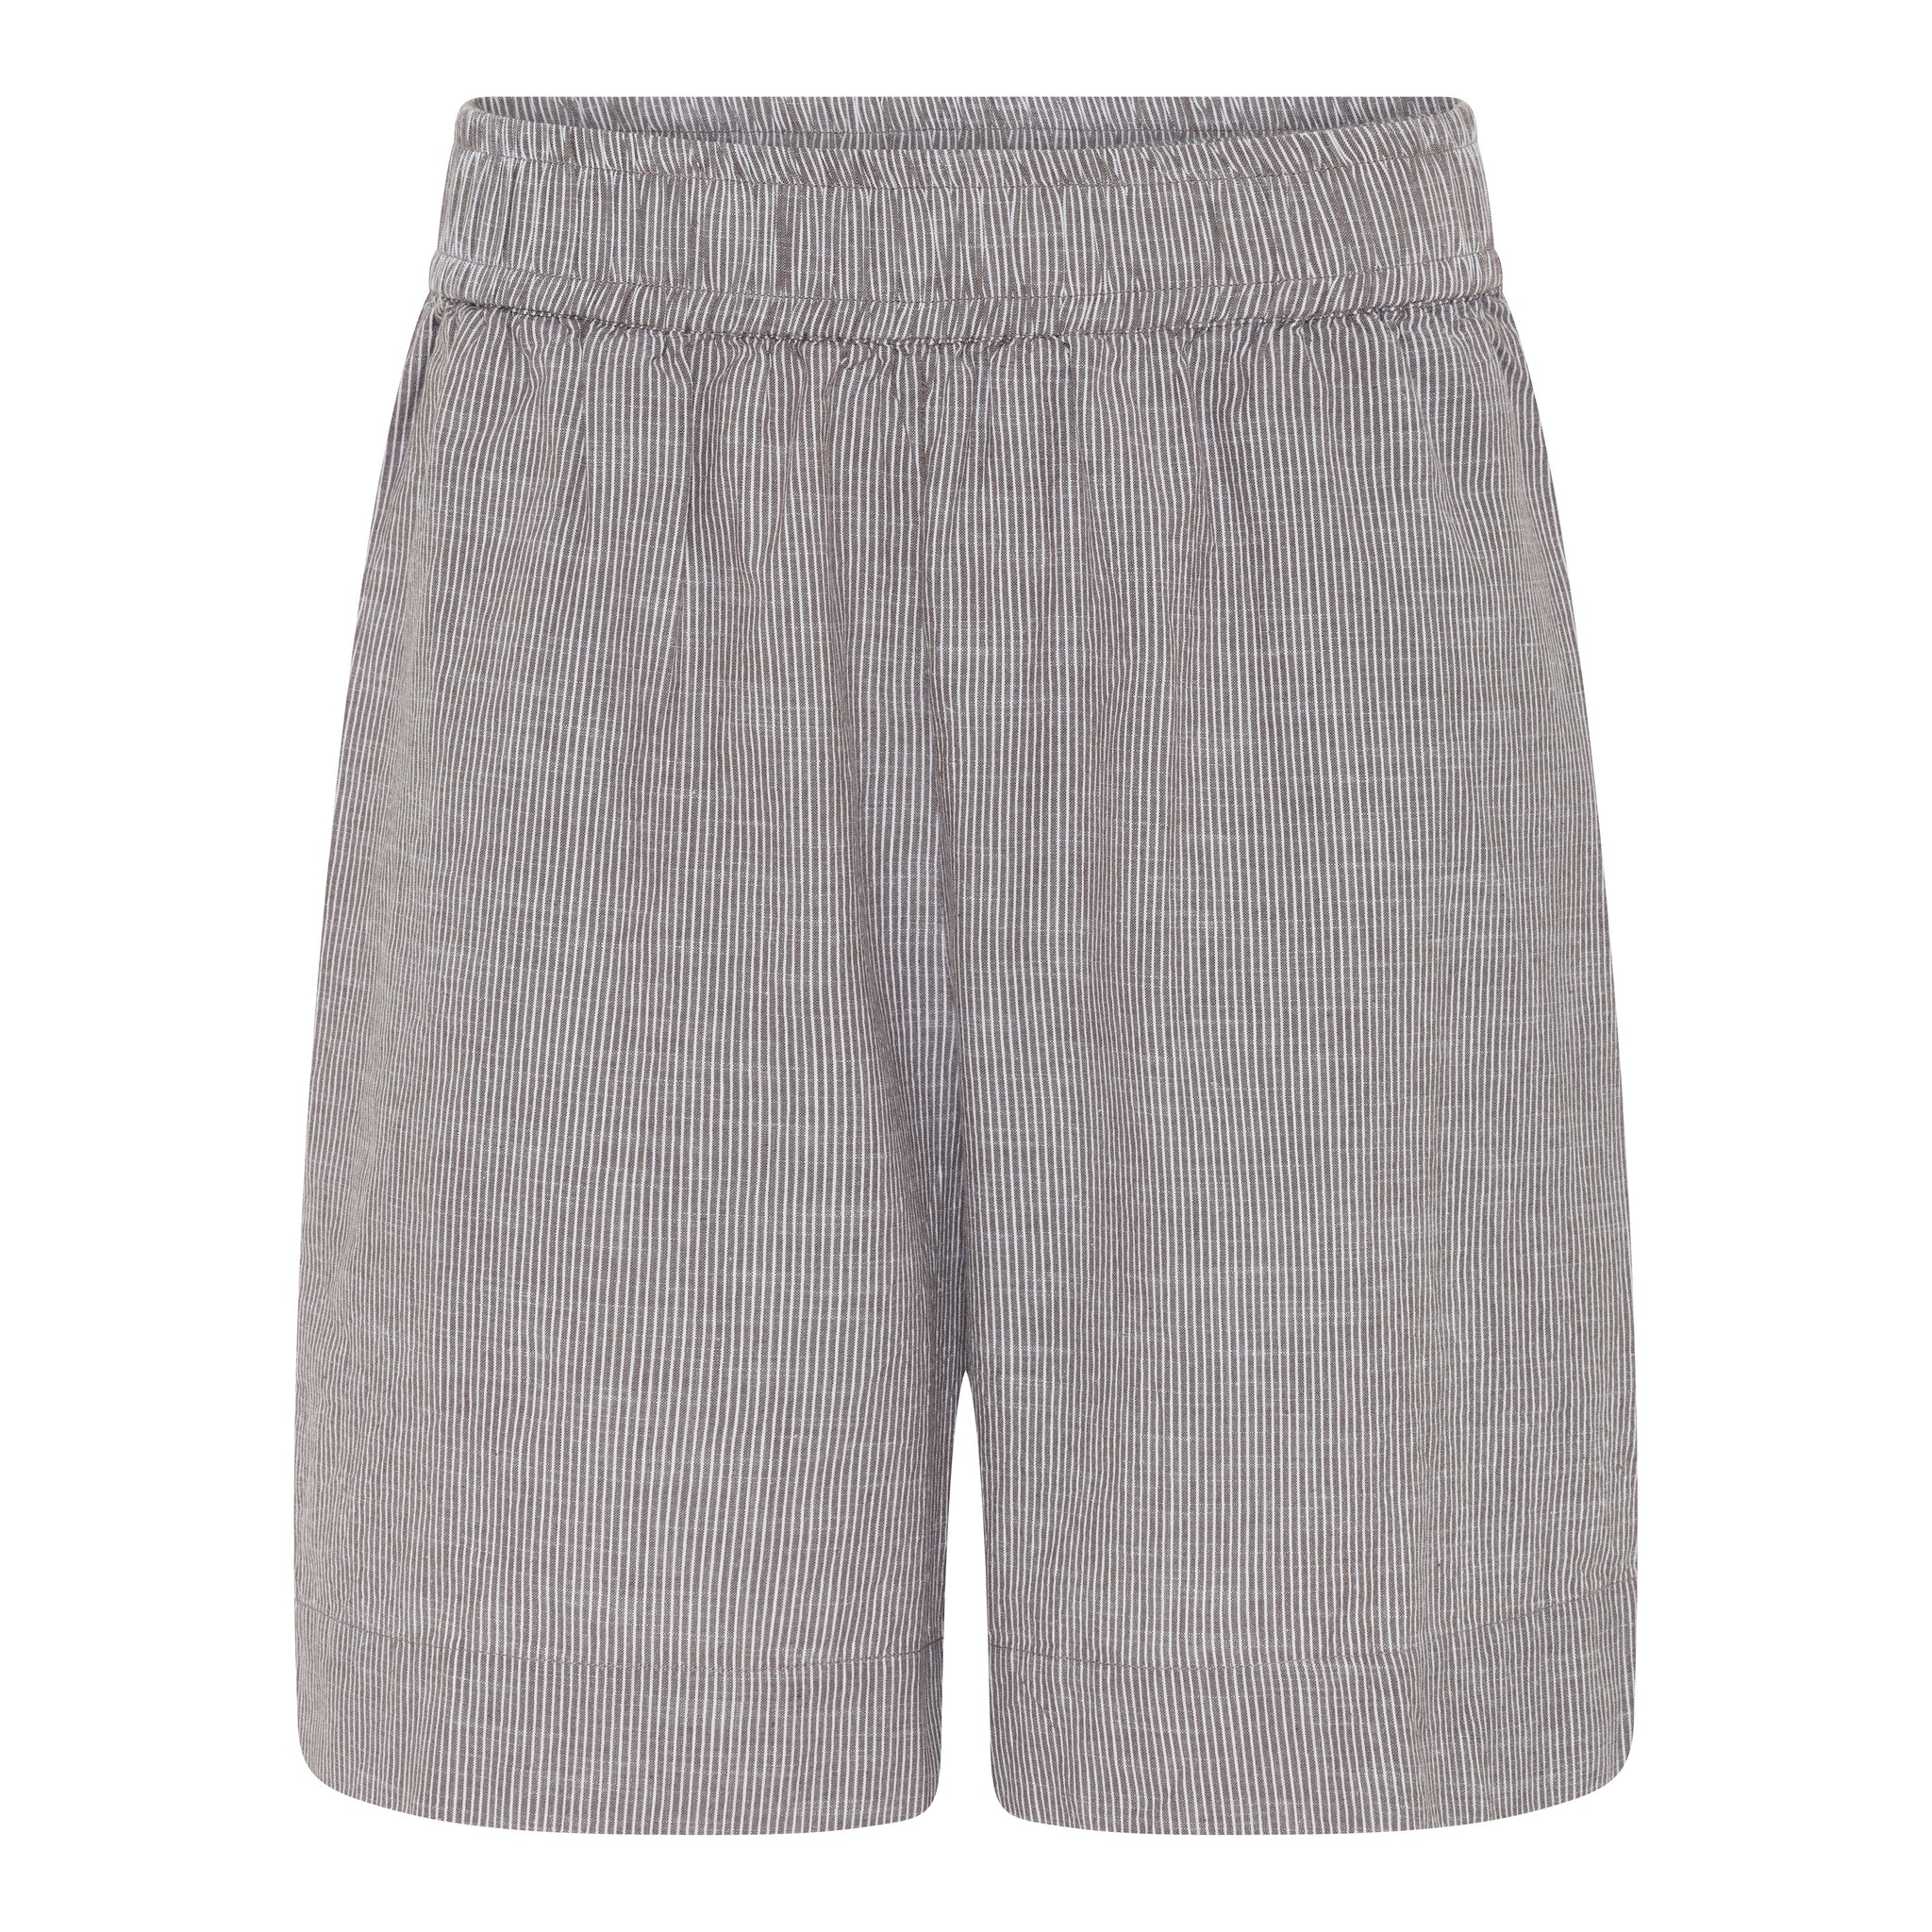 Melbourne shorts - Coffee quartz stripe - FRAU